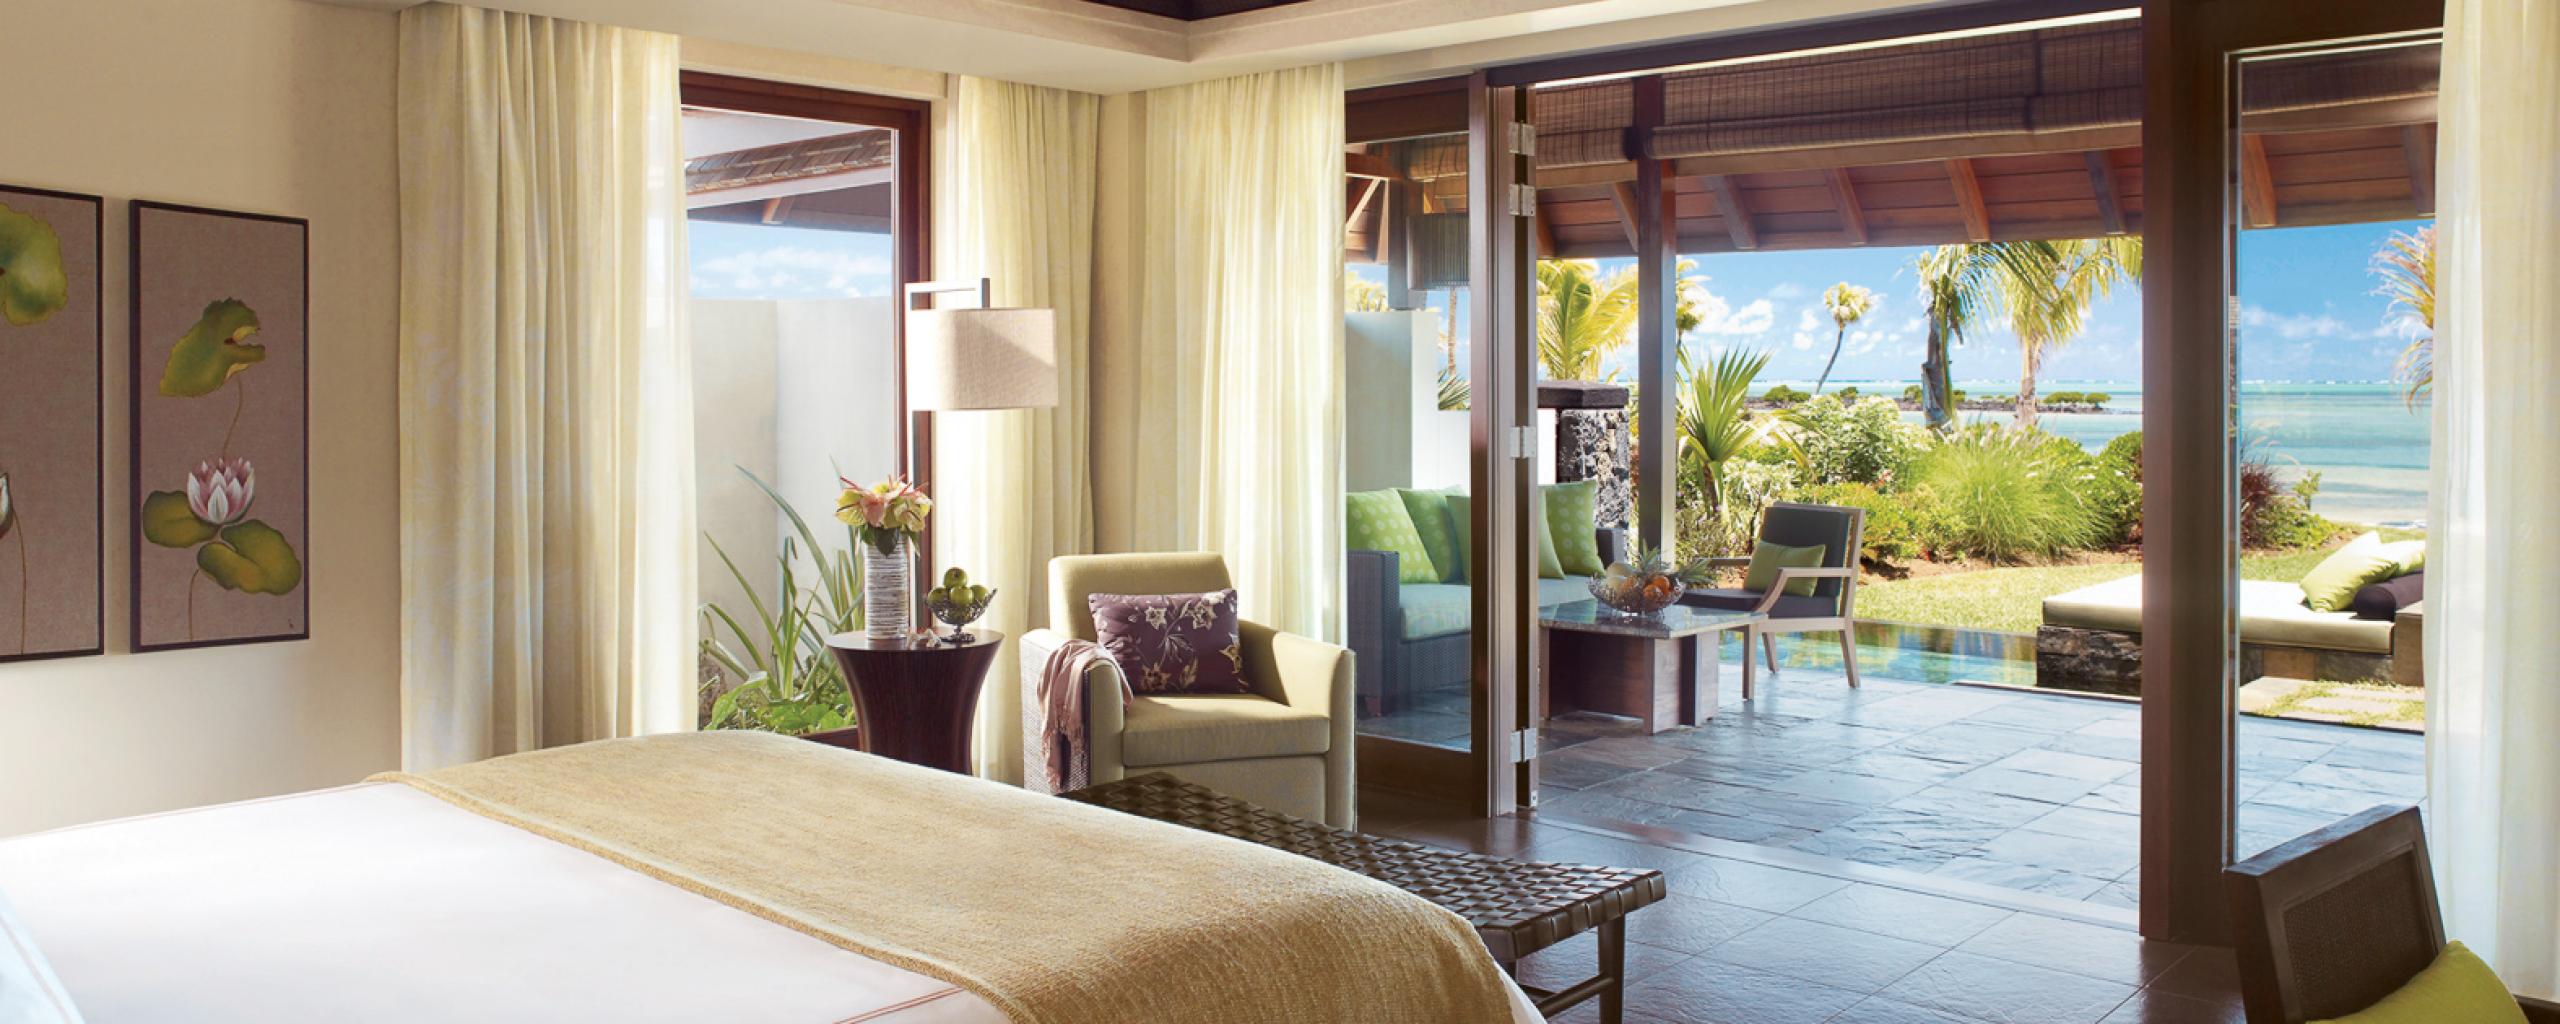 Four Seasons Resort at Anahita - Mauritius